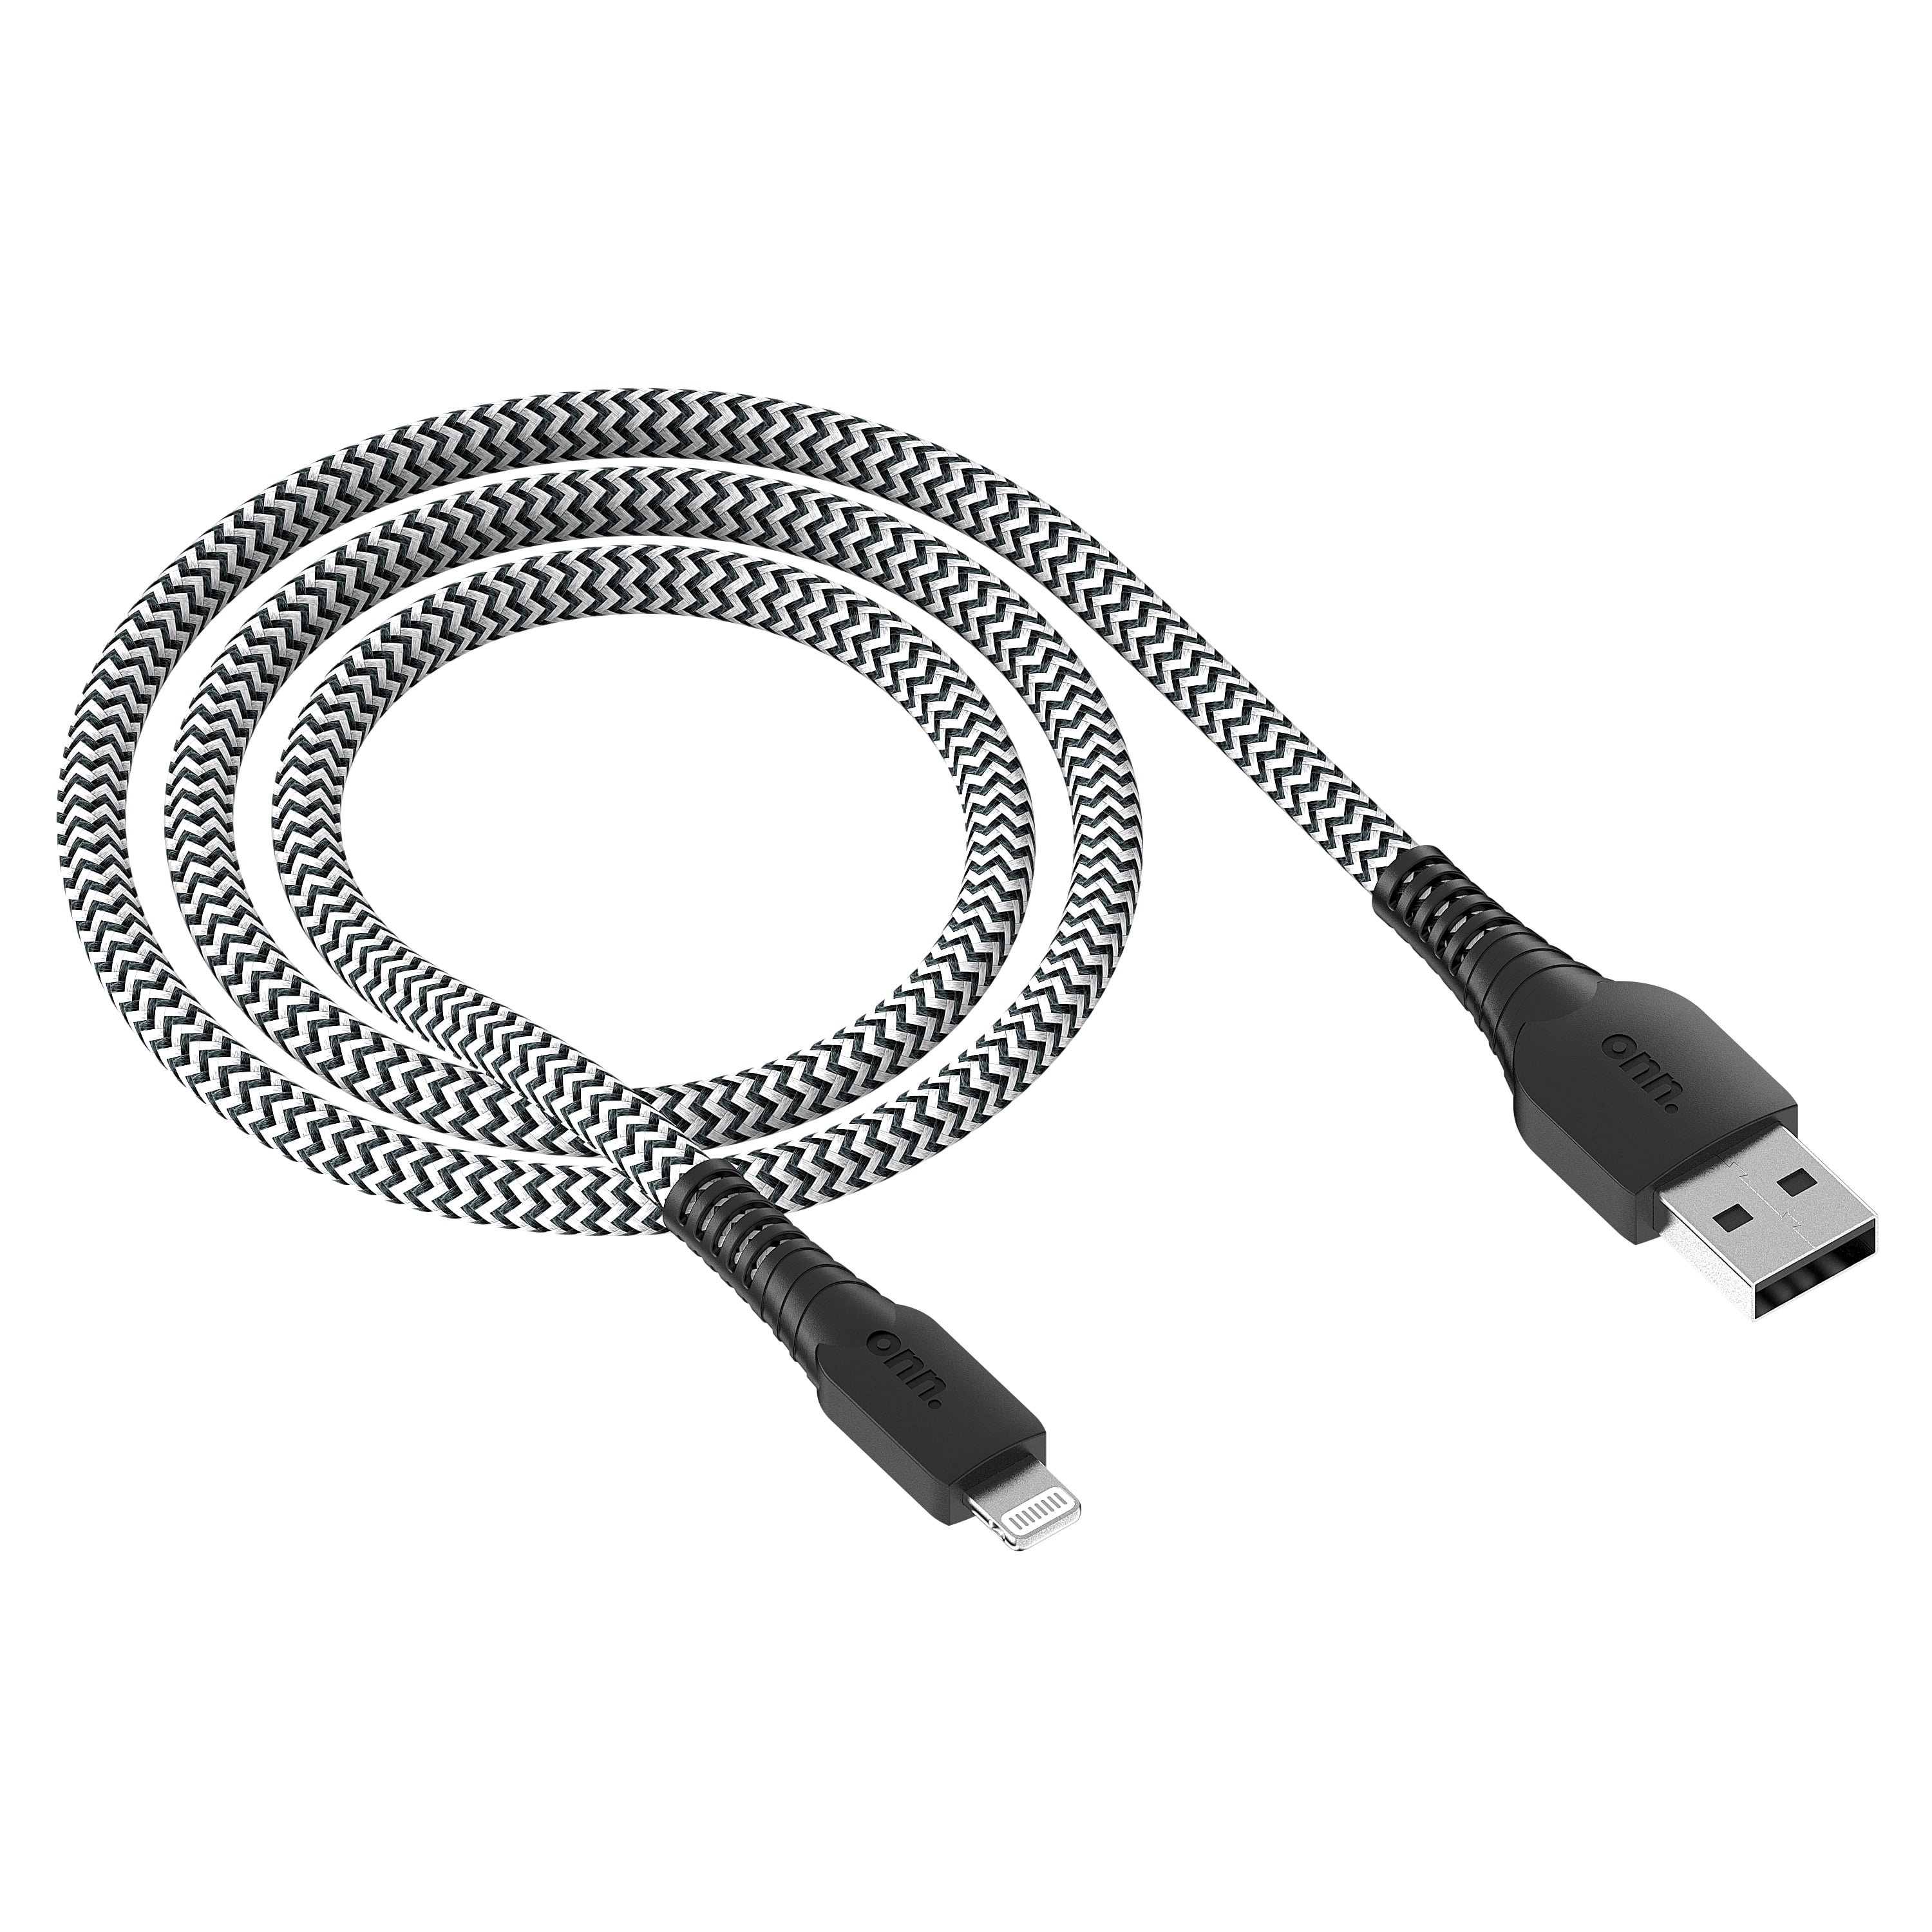 10' Lightning to USB Cable for iPhone/iPad/iPod, Black - Walmart.com